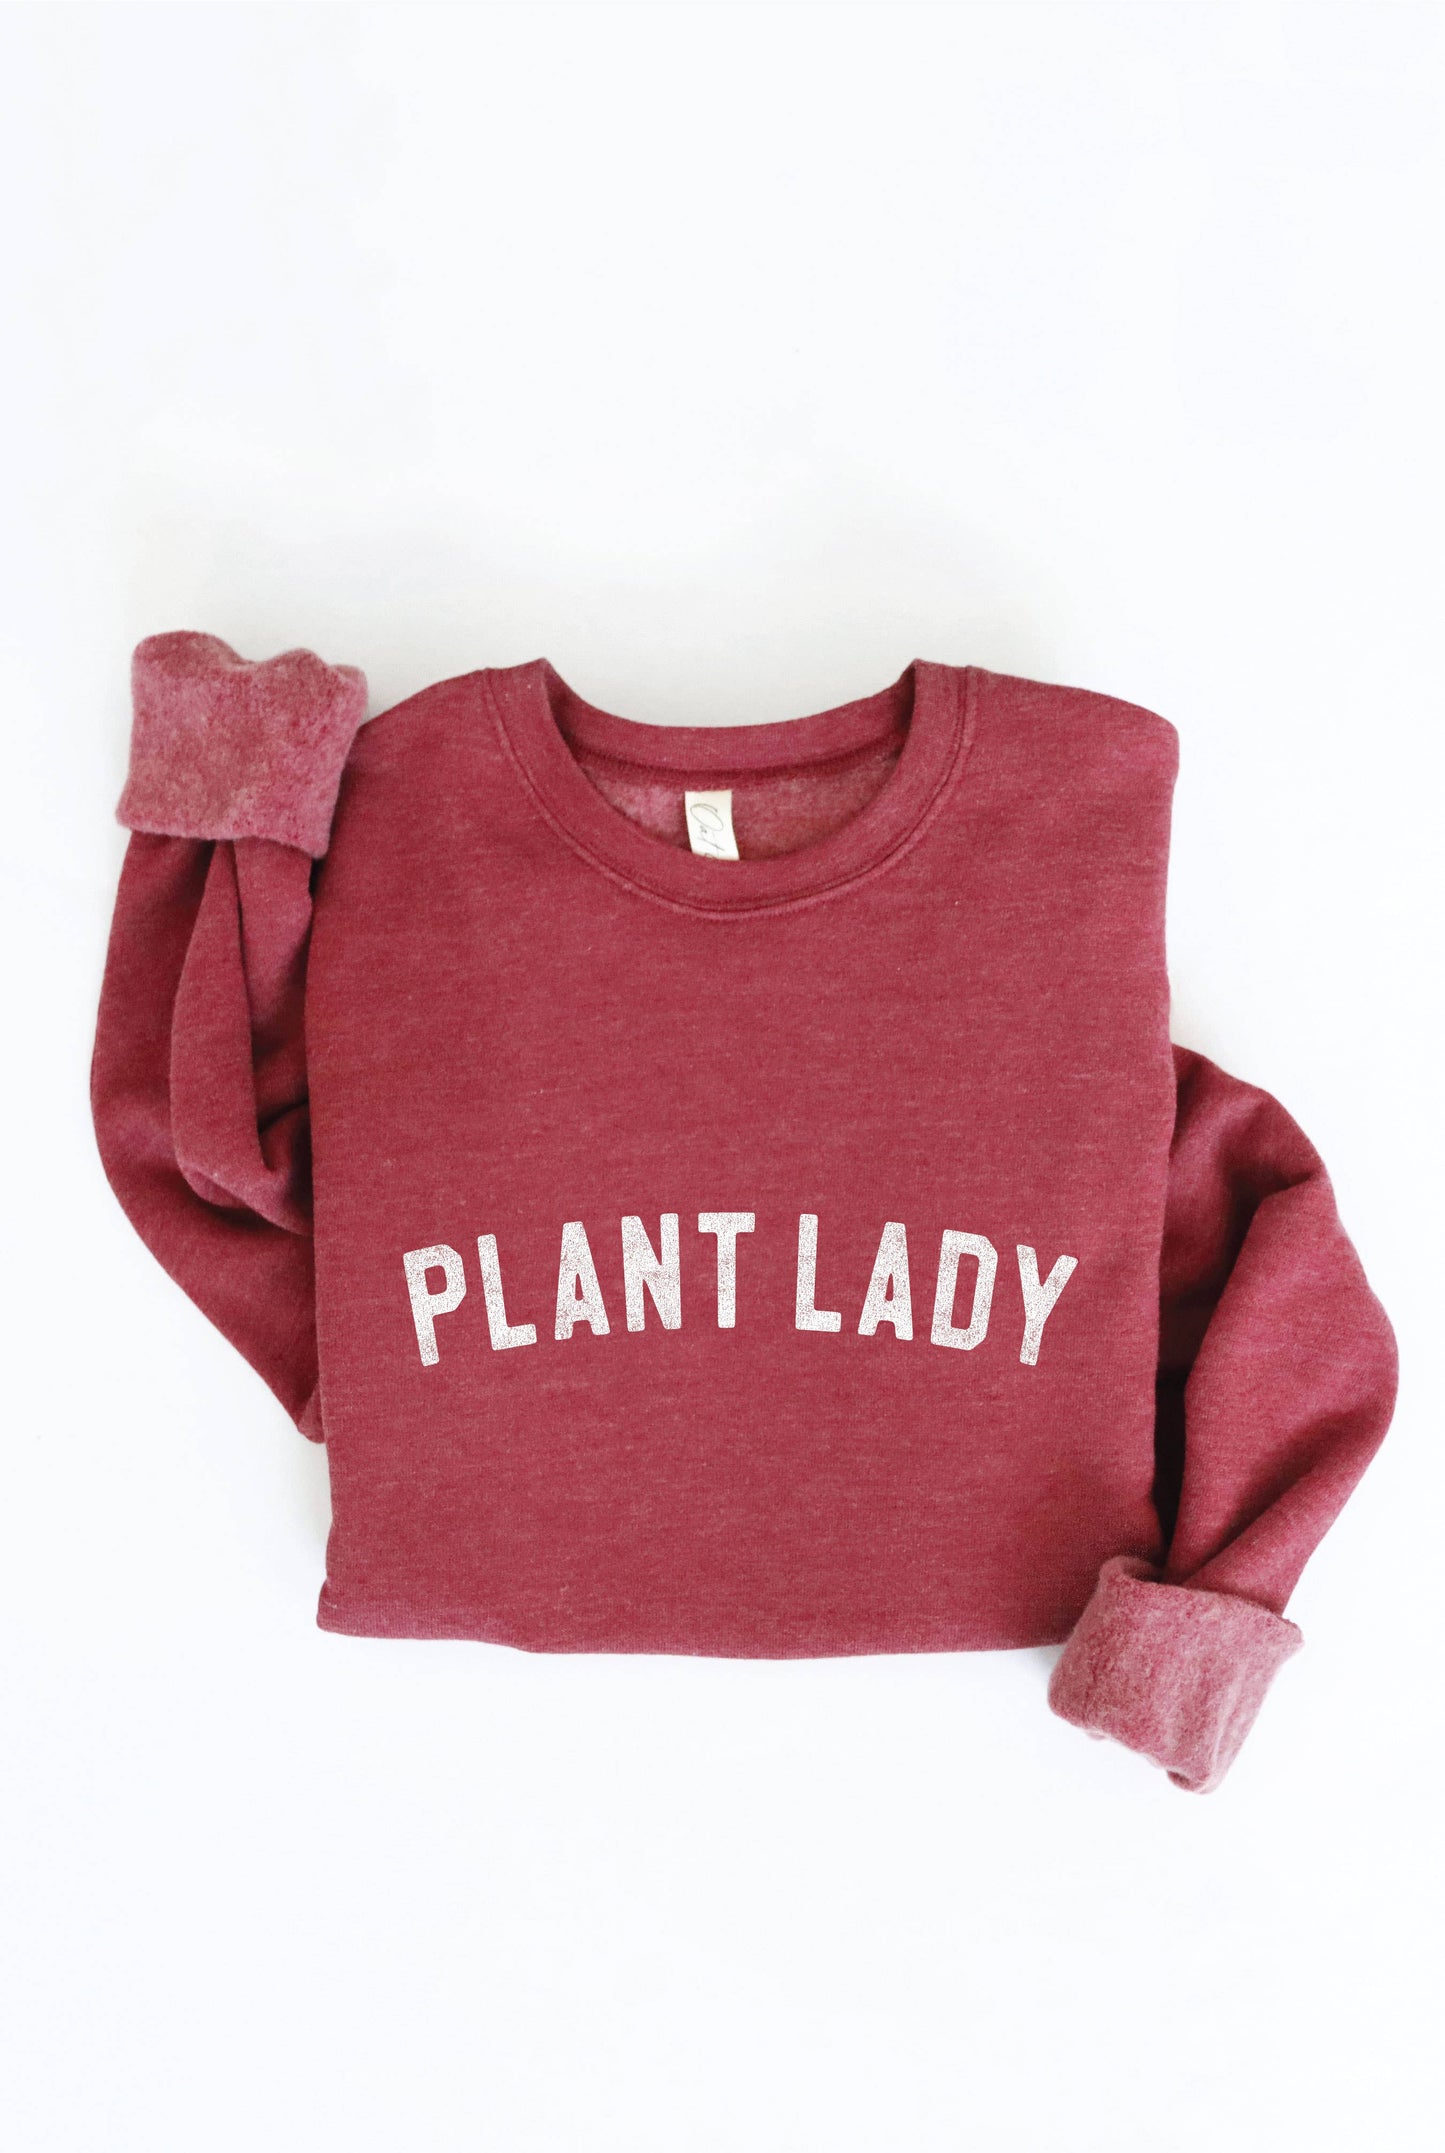 PLANT LADY Print Graphic Sweatshirt: XL / HEATHER FOREST